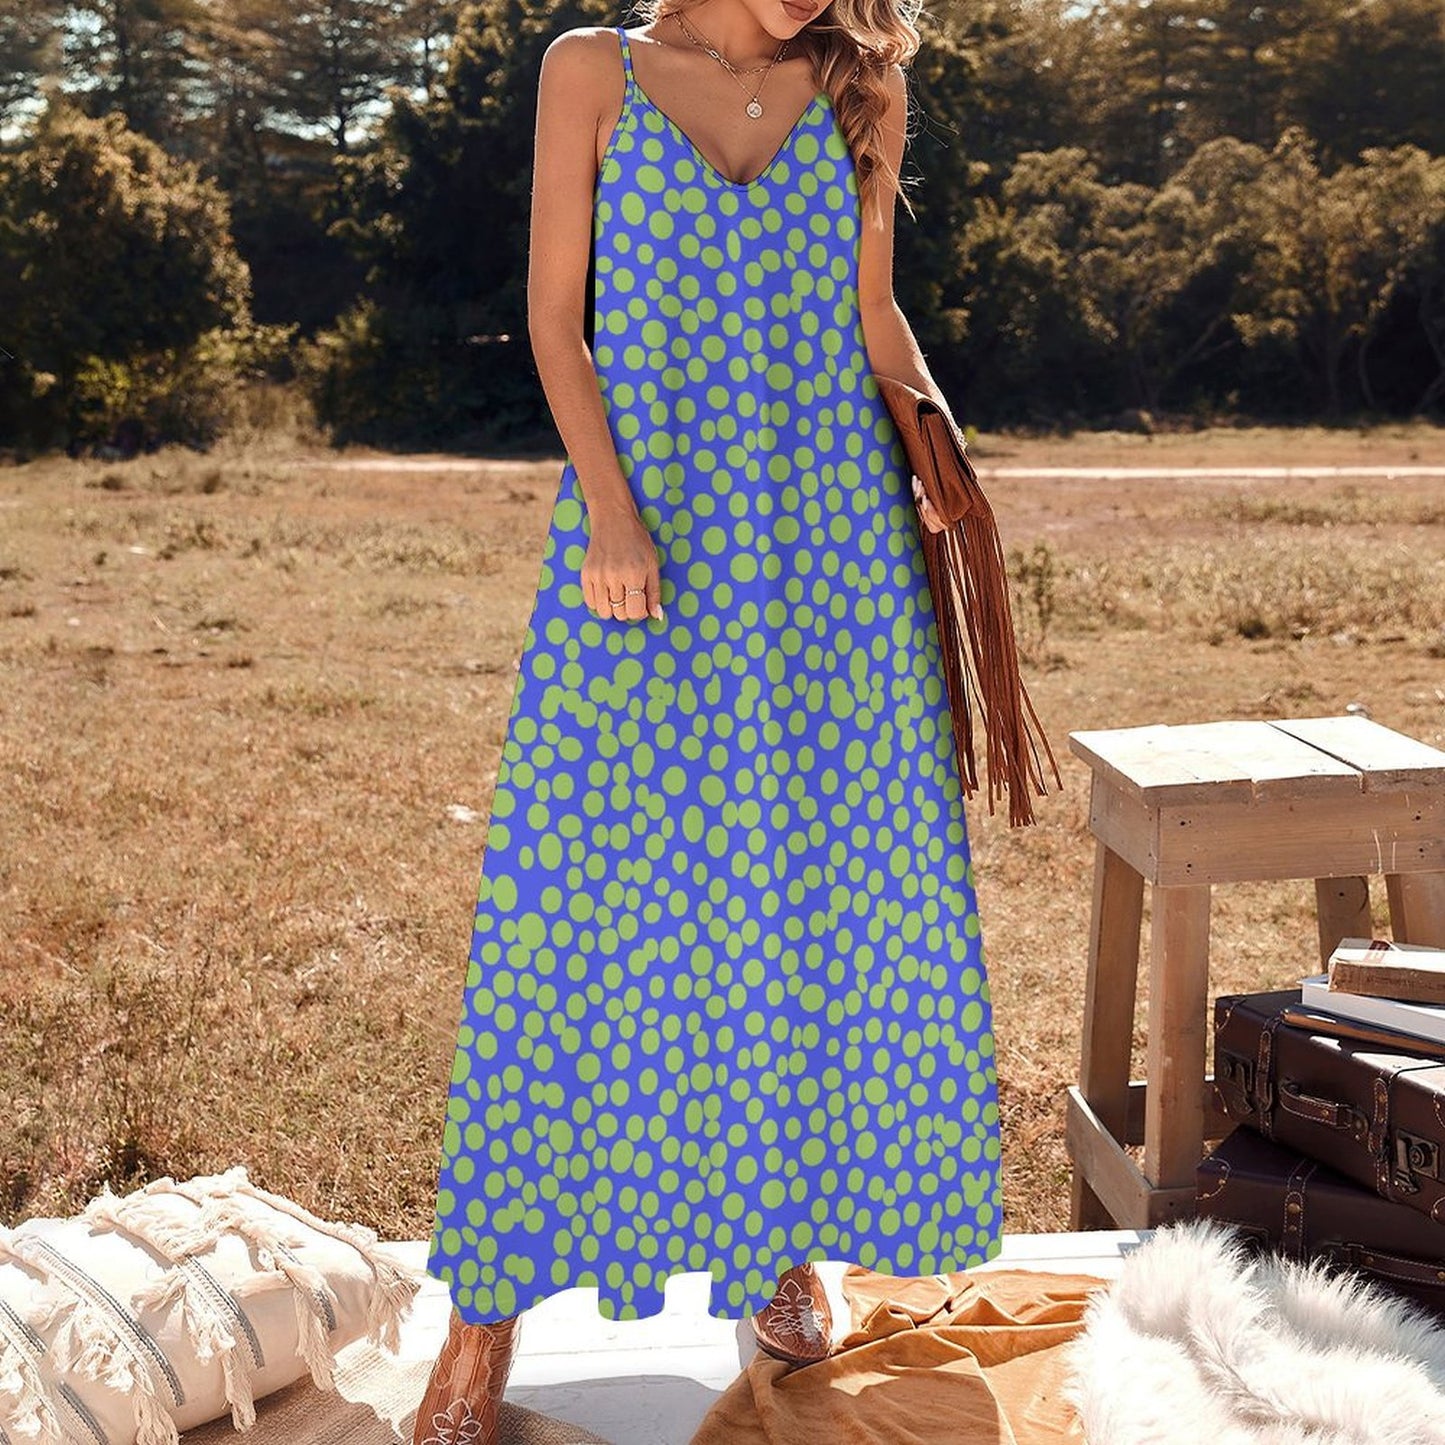 Mniaday Designs Retro Bloom Colleciton  Spaghetti Strap Ankle-Length Dress Long Dress Blue